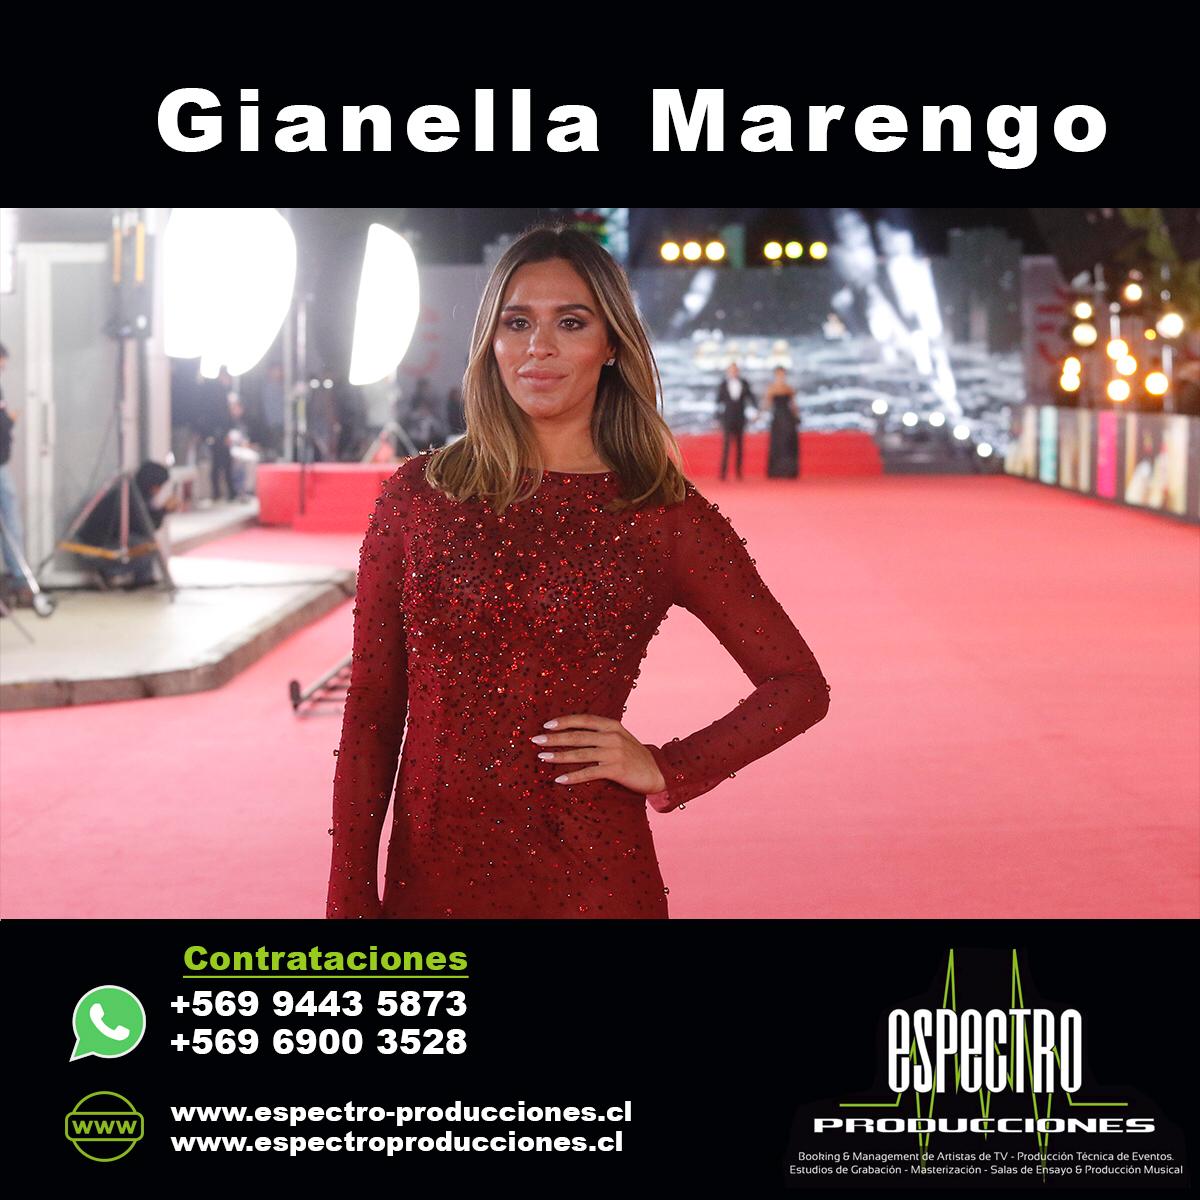 Gianella Marengo